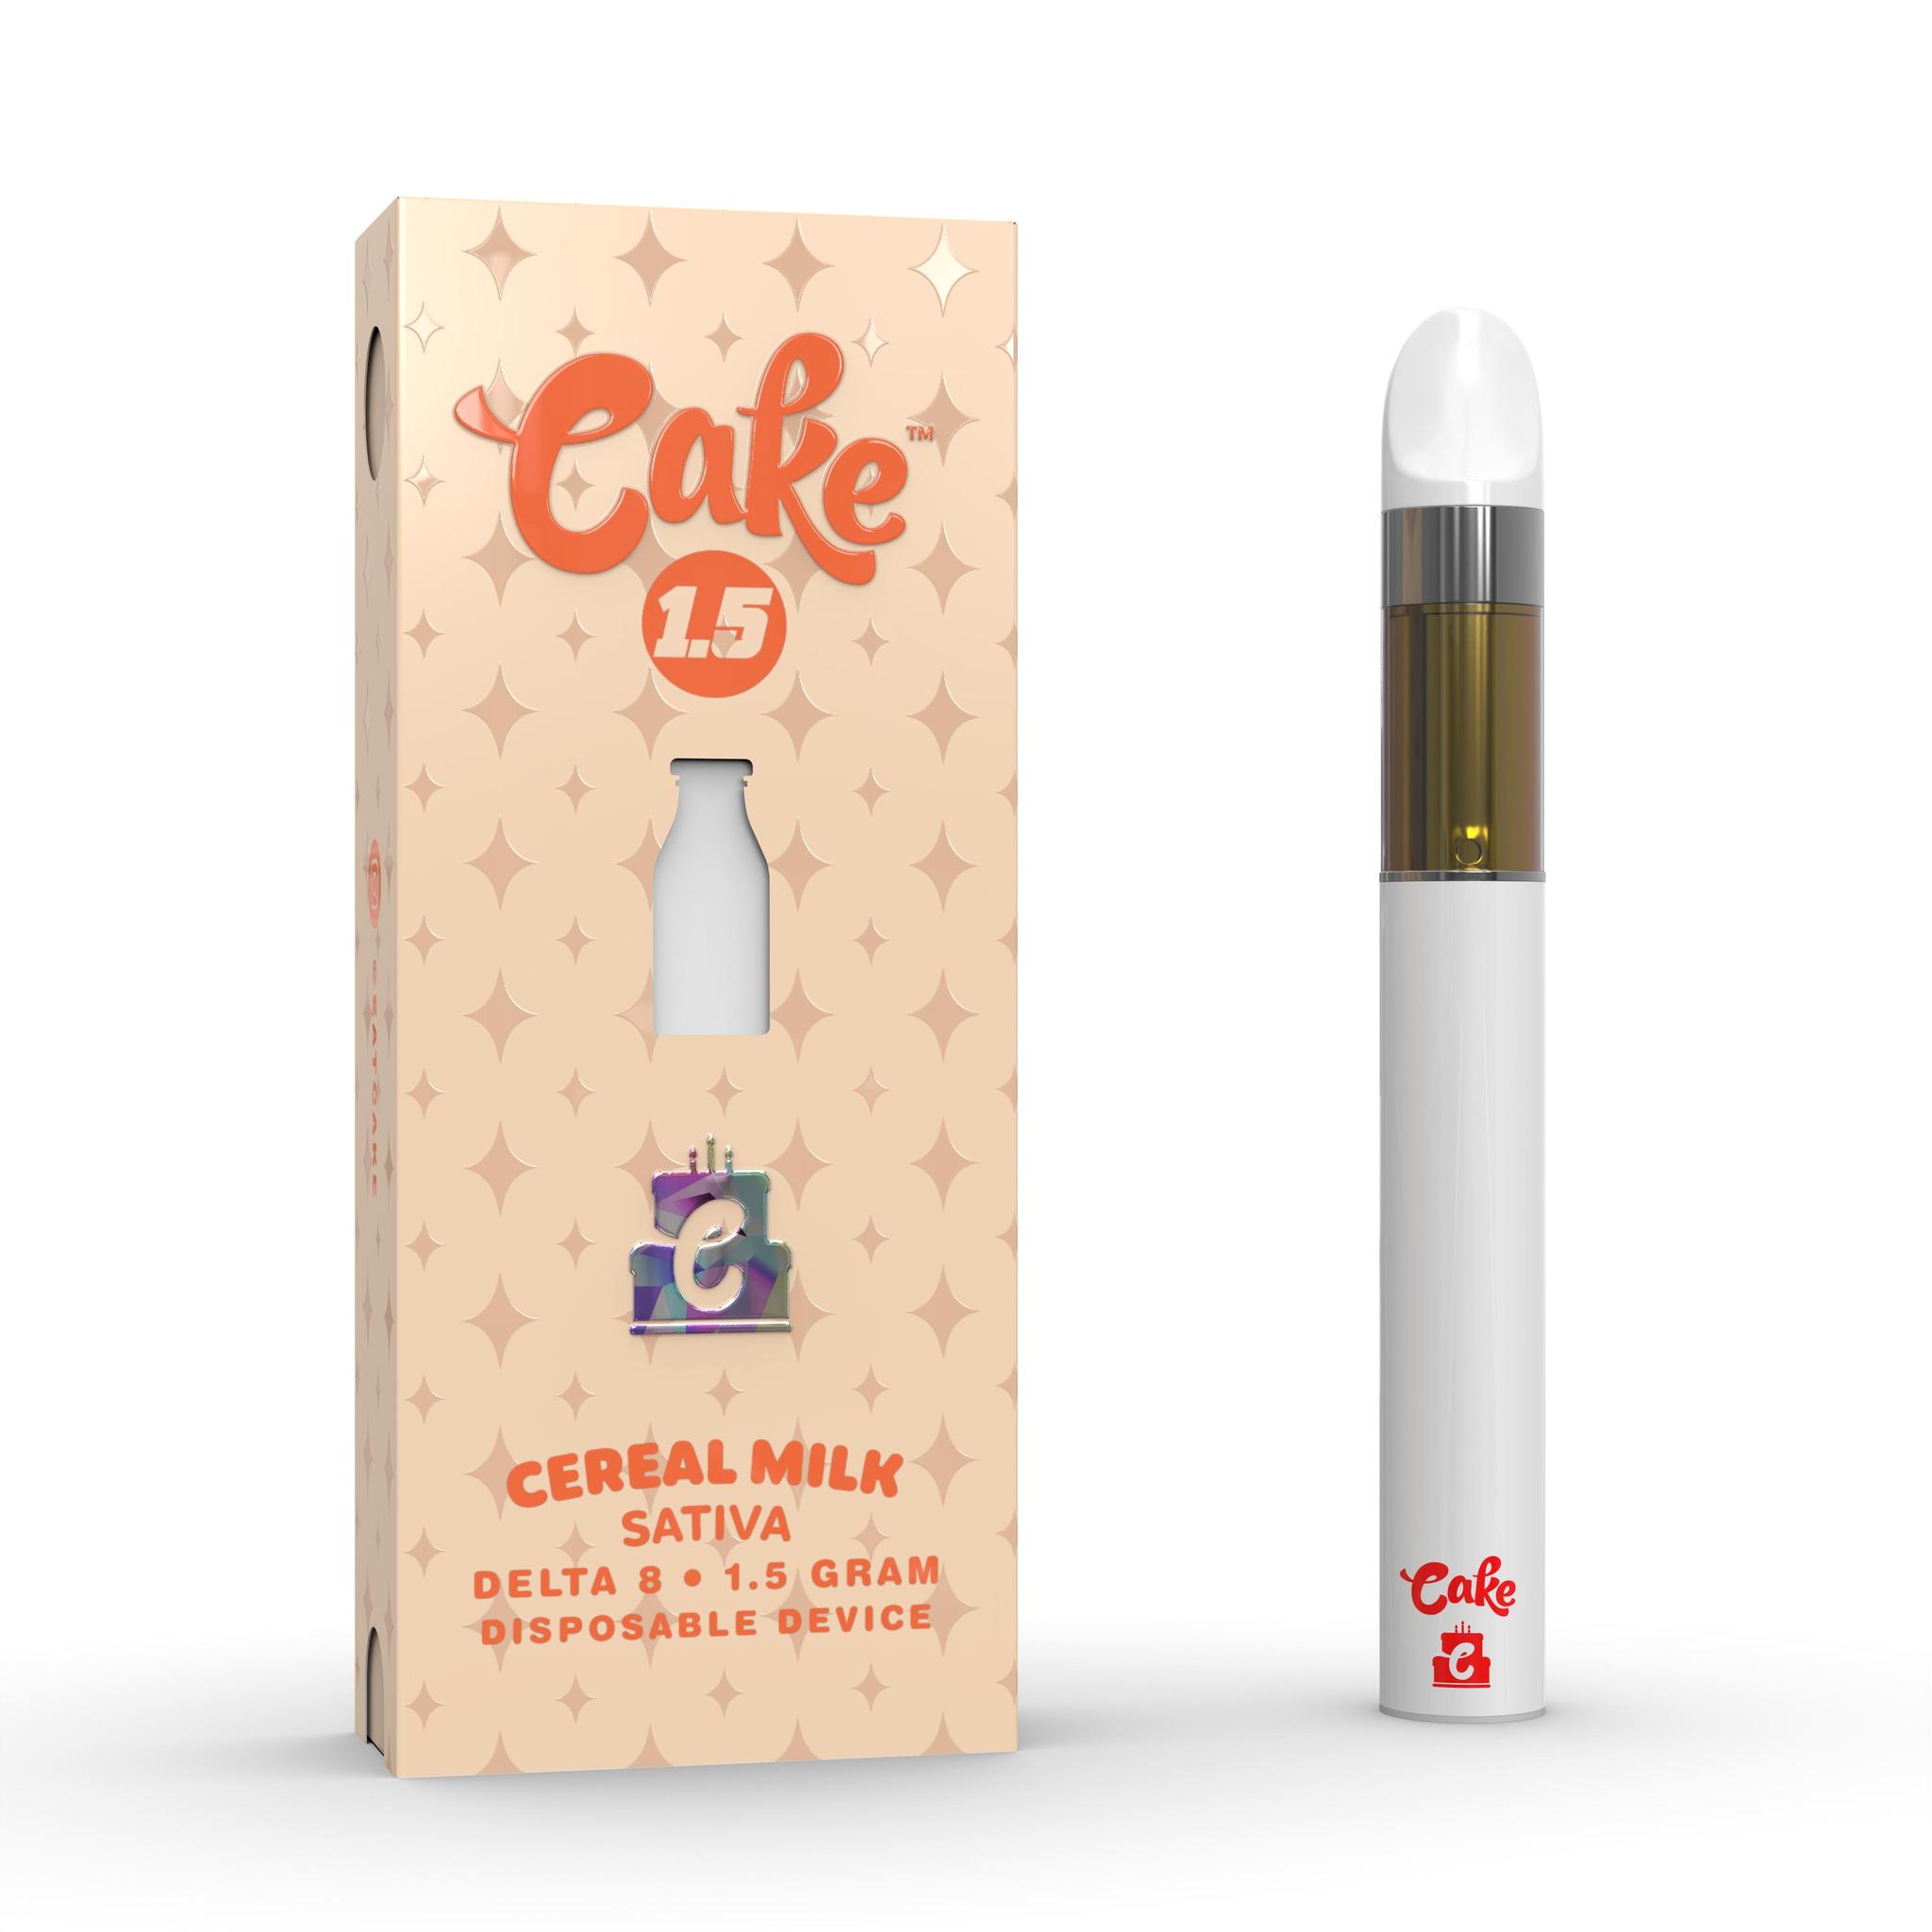 Cake Delta 8 “Cereal Milk” Disposable Vape